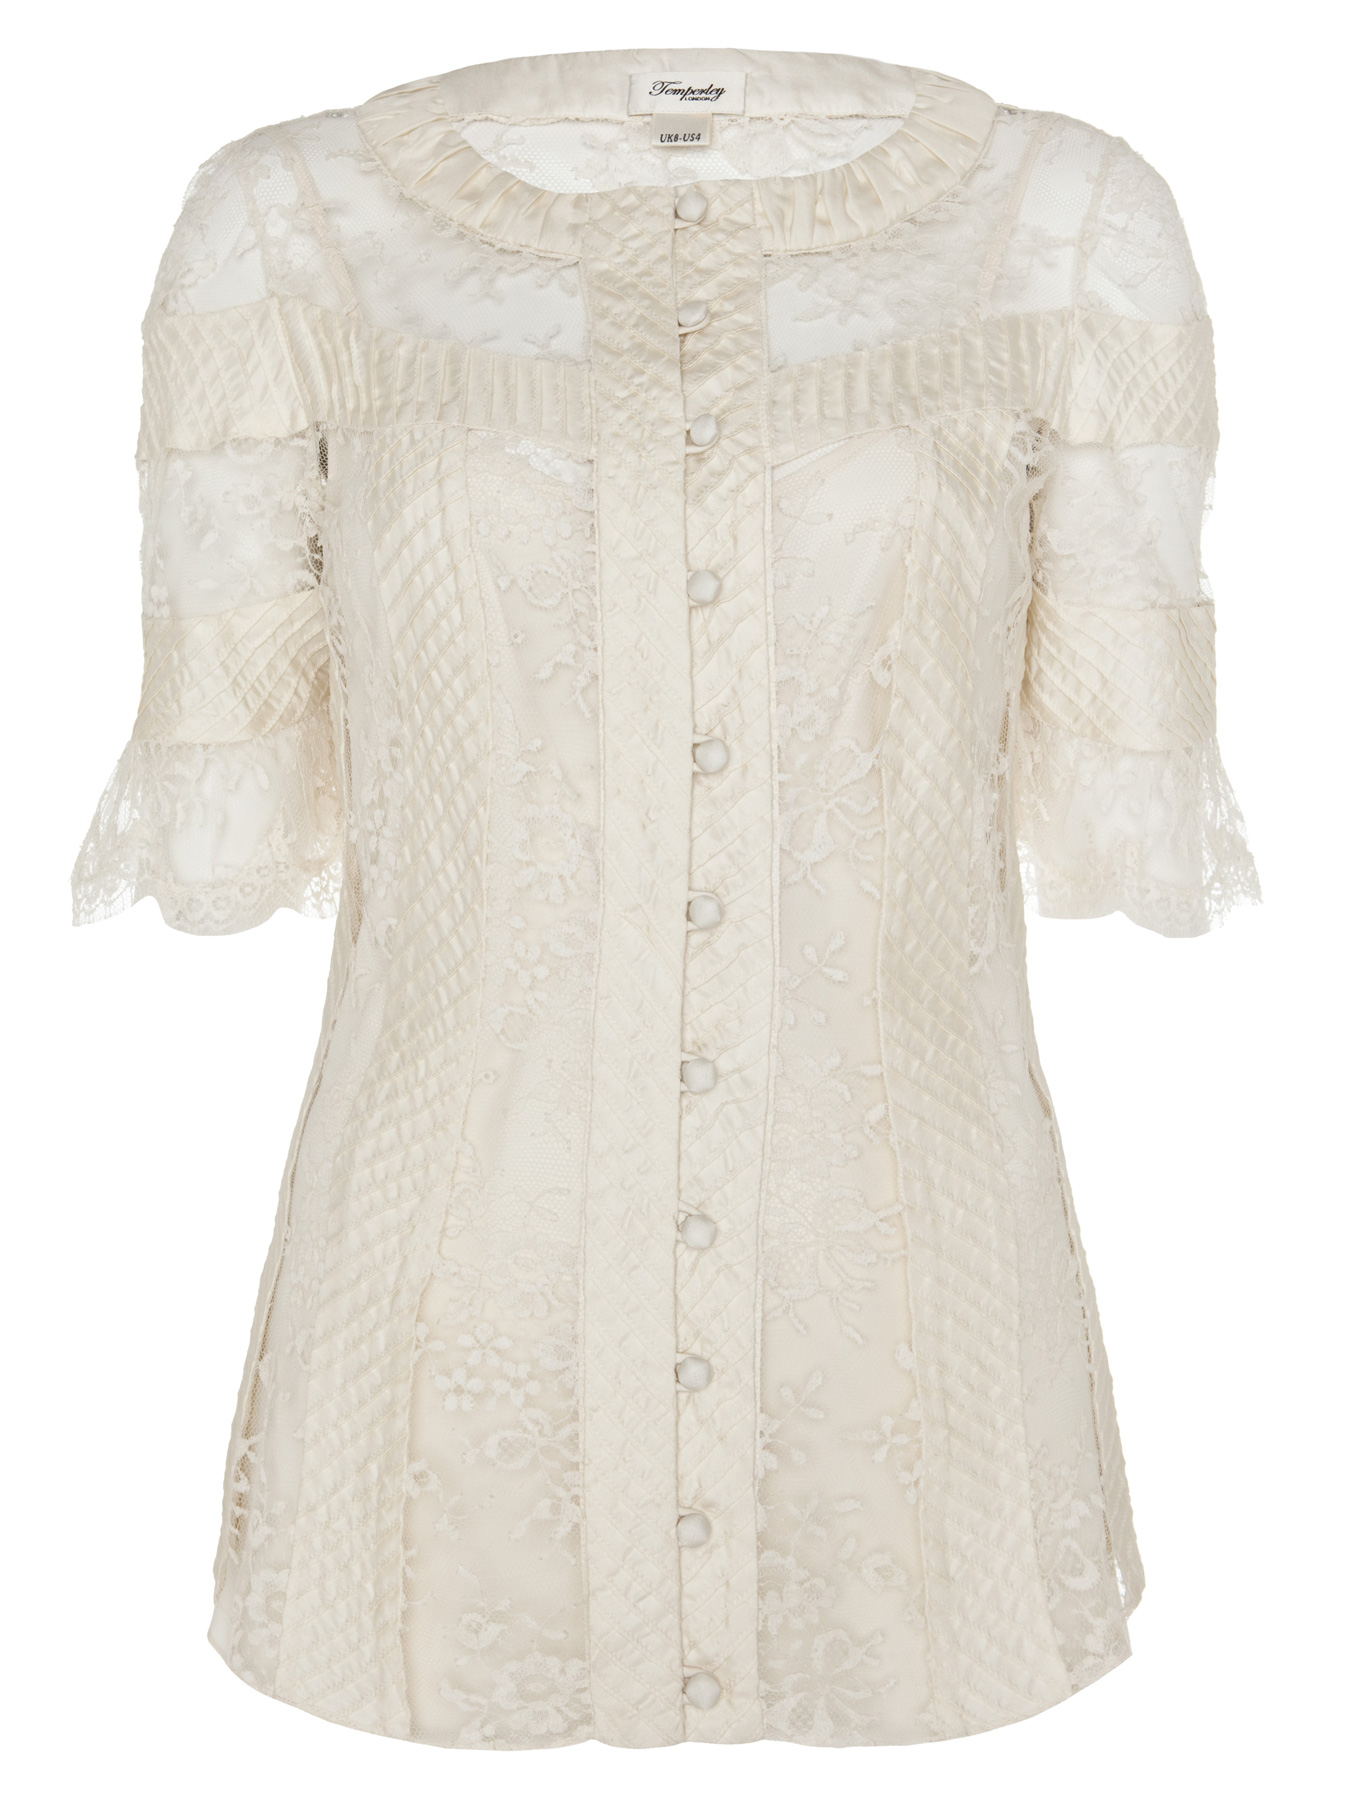 Temperley london Jewel Shirt in White | Lyst